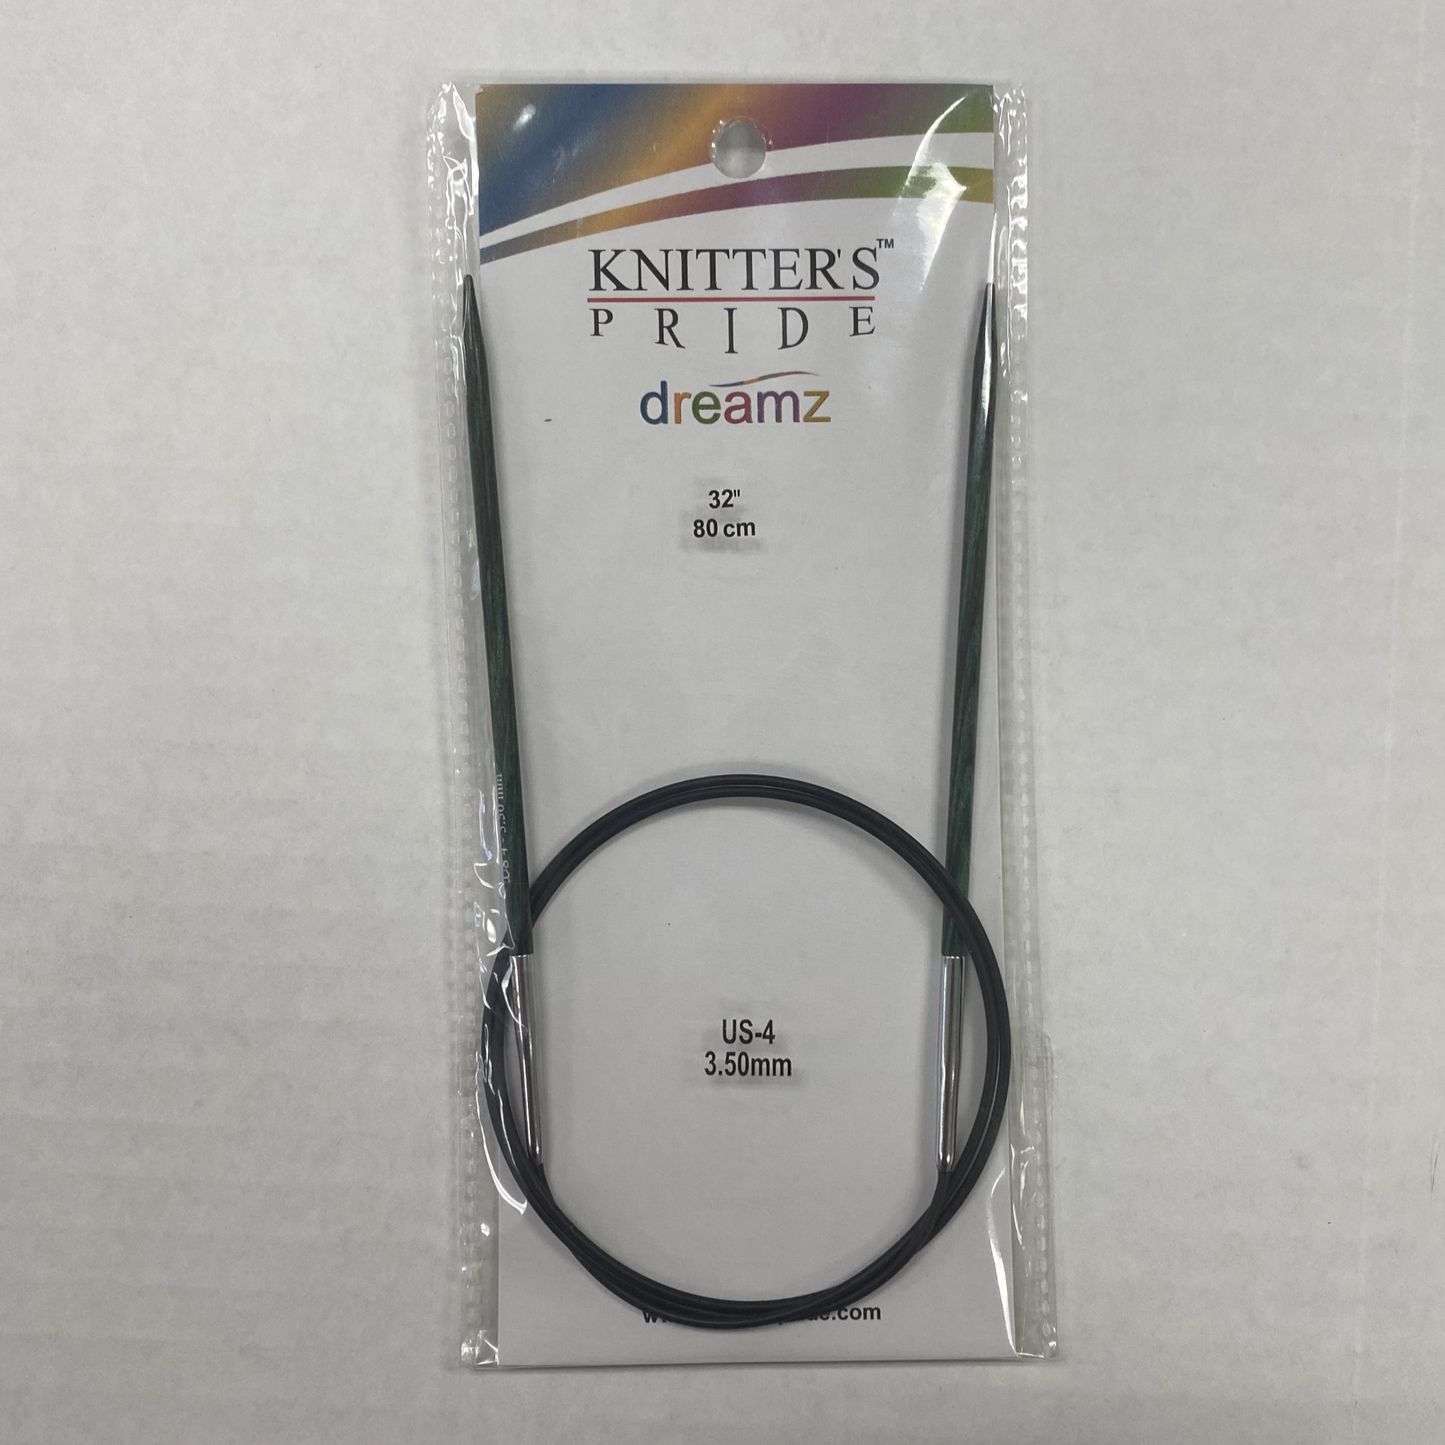 Knitter's Pride - Dreamz - US 4 / 3.50mm Fixed Circular Needles